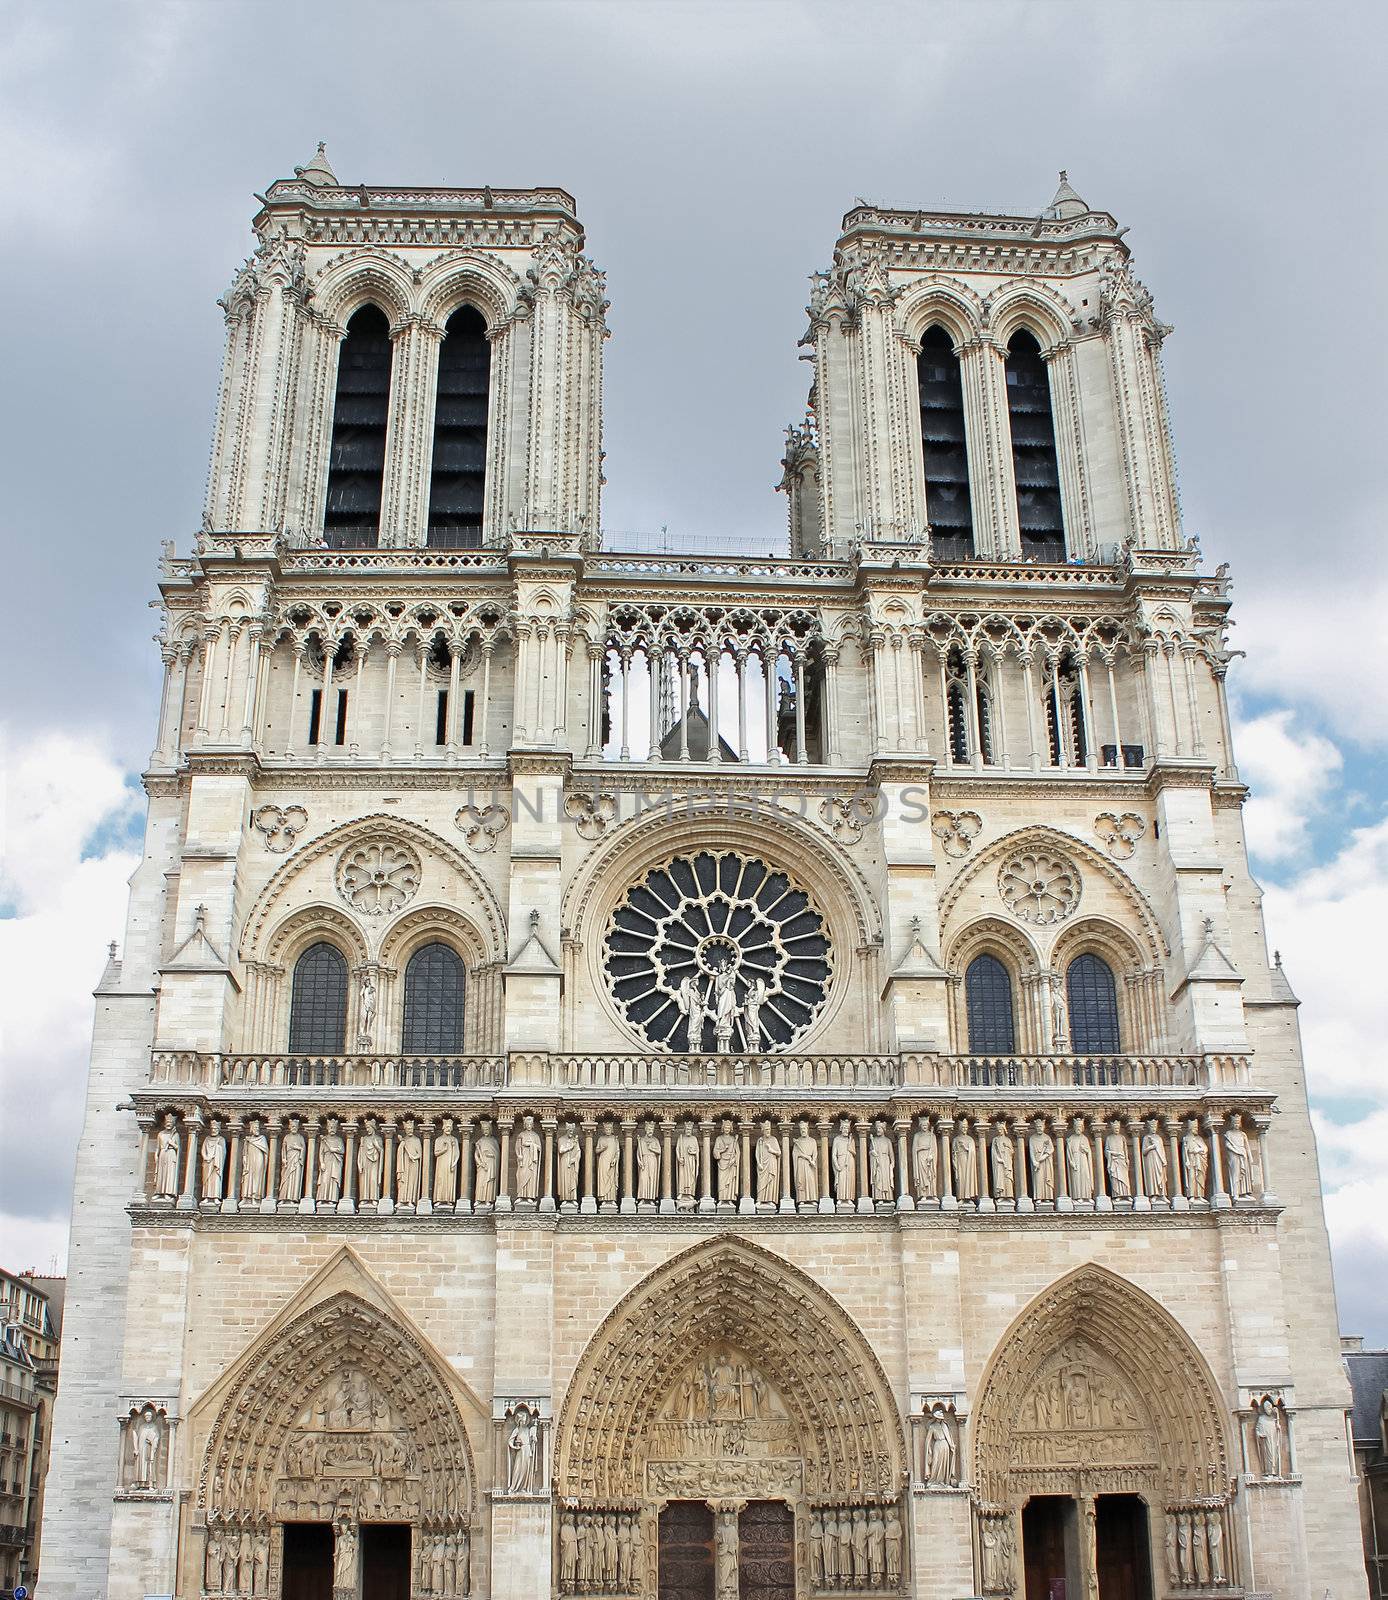 Facade of Notre Dame de Paris. France  by NickNick